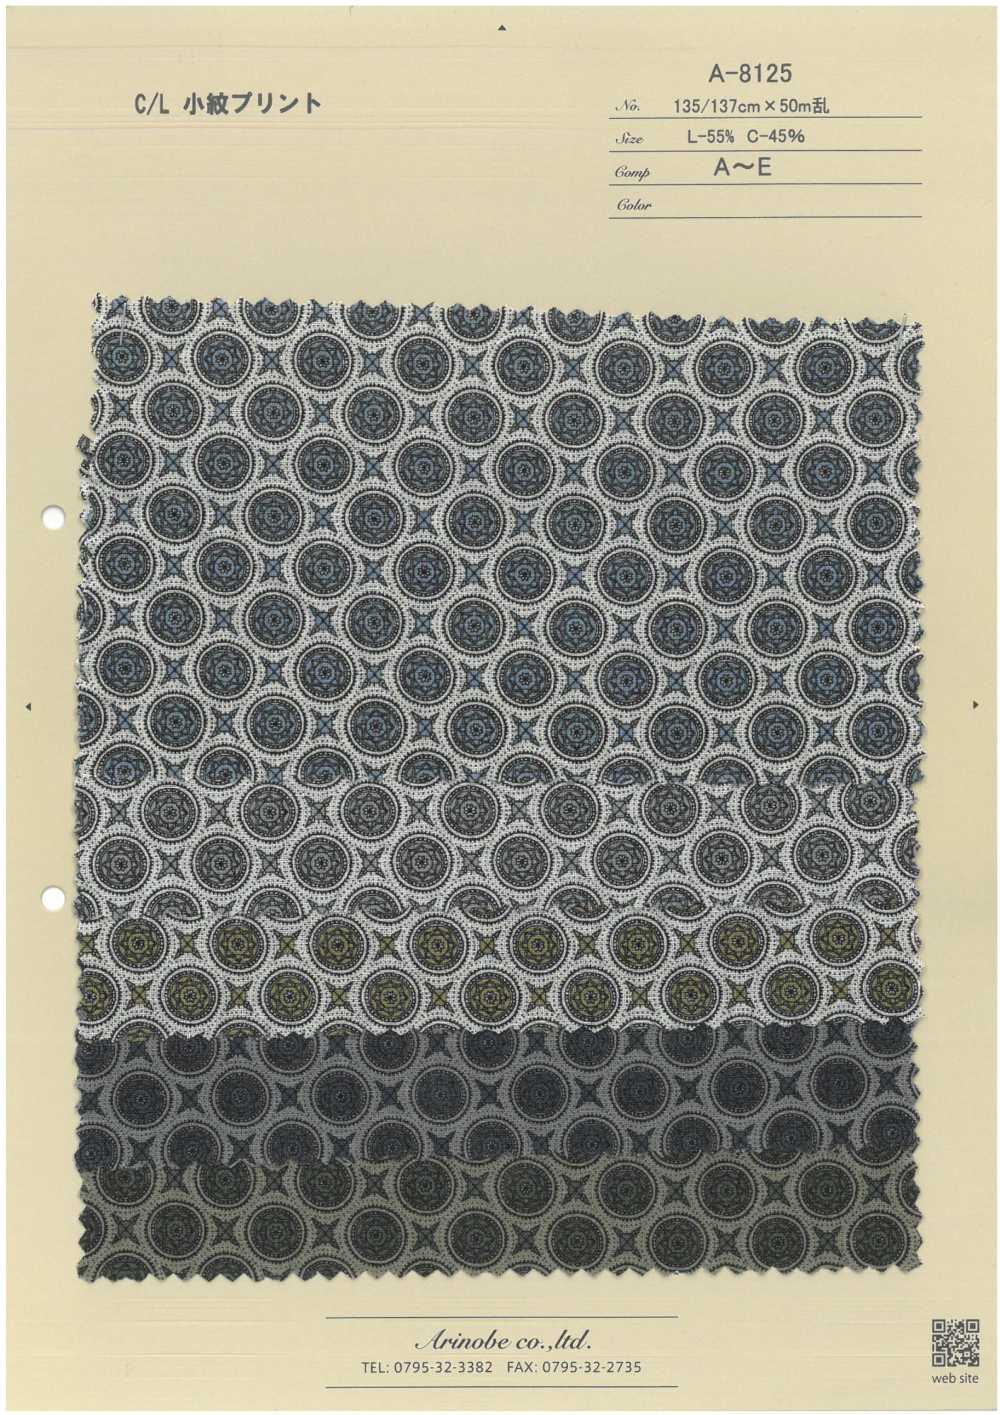 A-8125 C/L Fine Print[Textile / Fabric] ARINOBE CO., LTD.